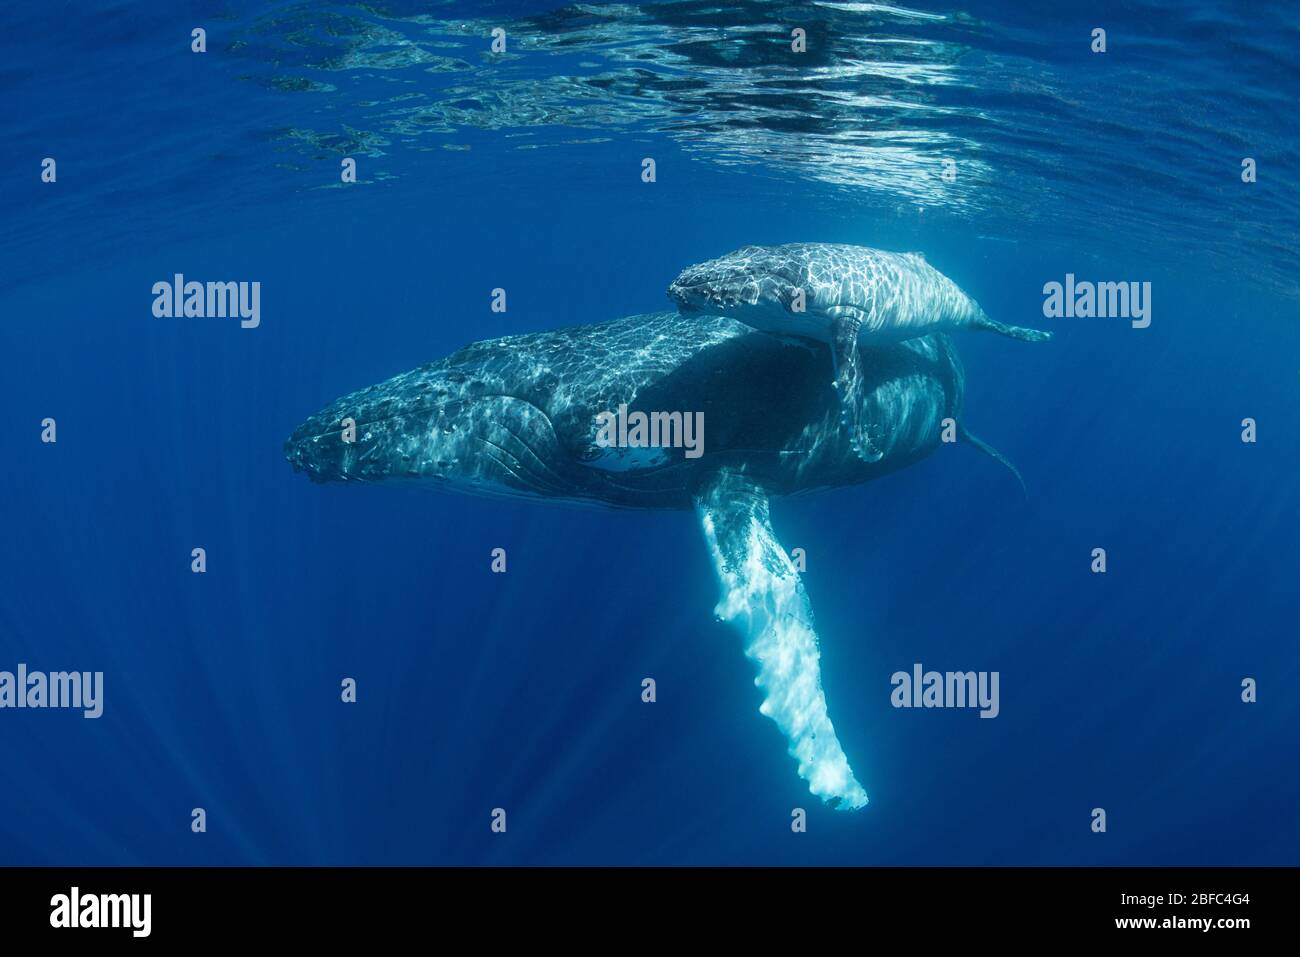 Madre de ballena jorobada con pequeño ternero pálido, Megaptera novaeangliae, cerca de la isla de Nomuka, grupo ha'apai, Reino de Tonga, Pacífico Sur Foto de stock